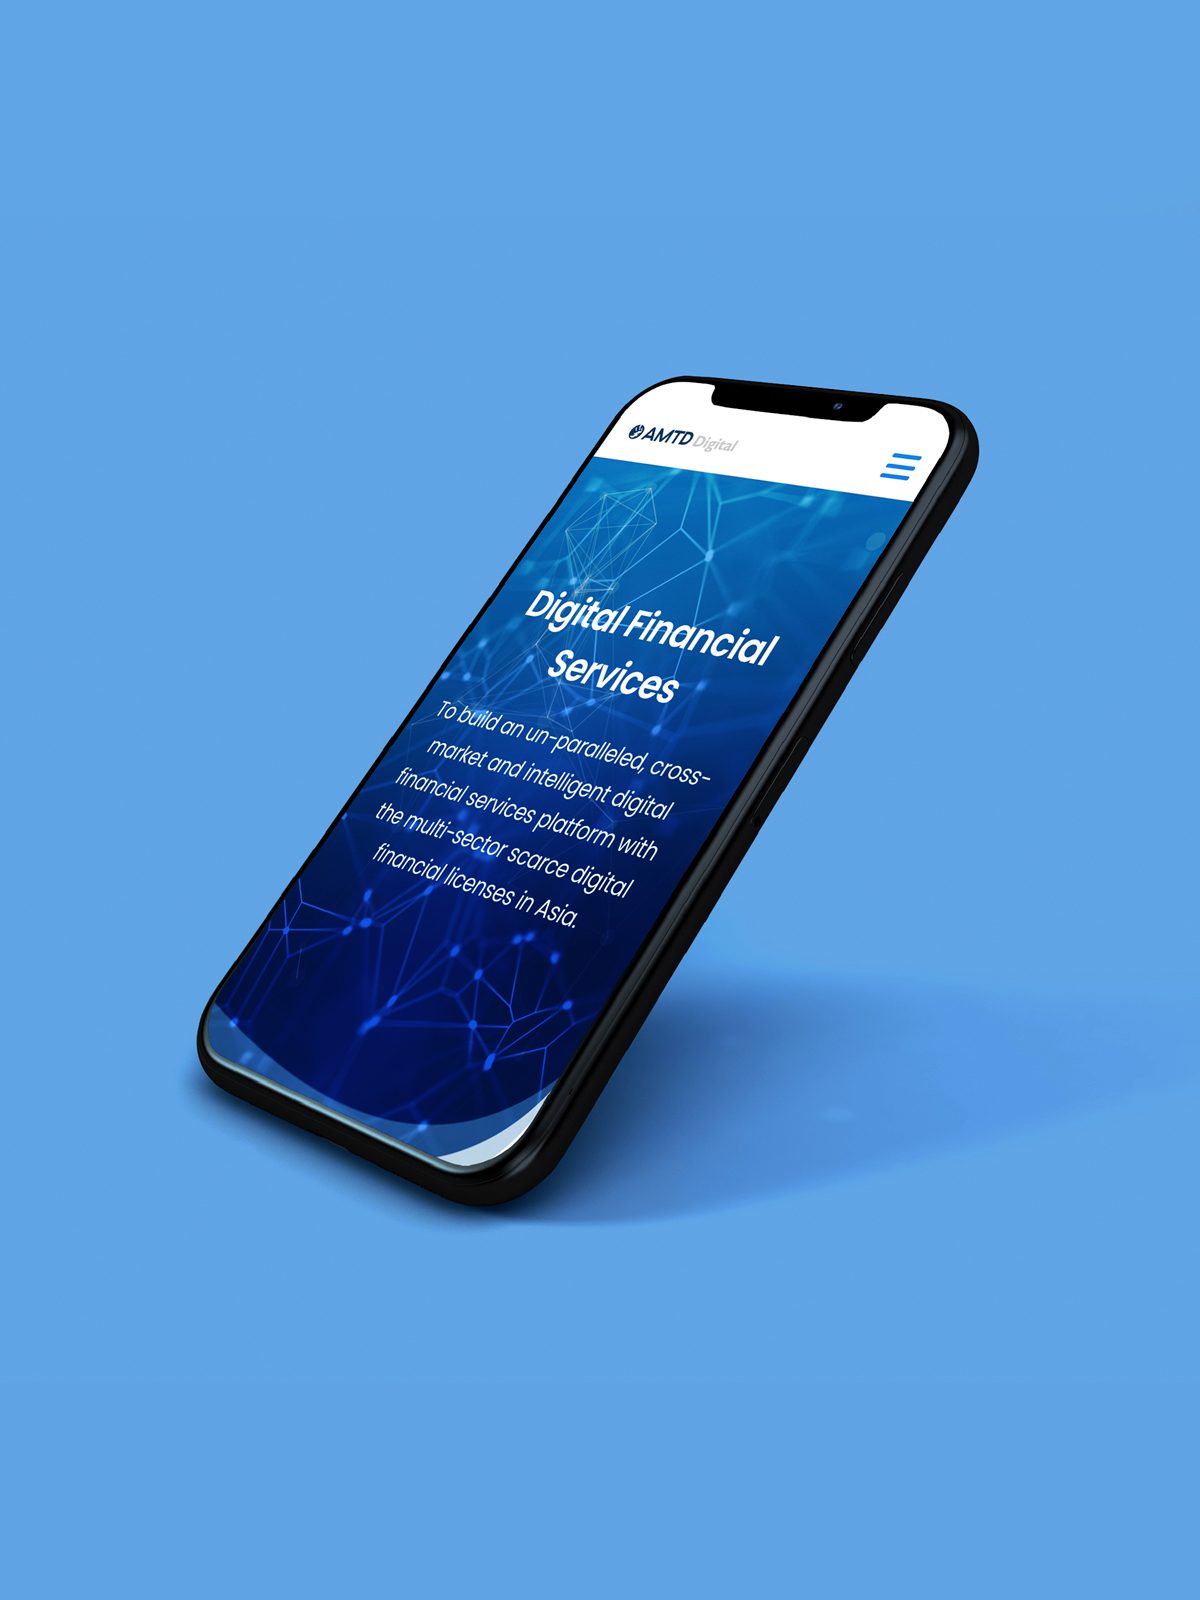 AMTD International website shown in phone screens on blue background